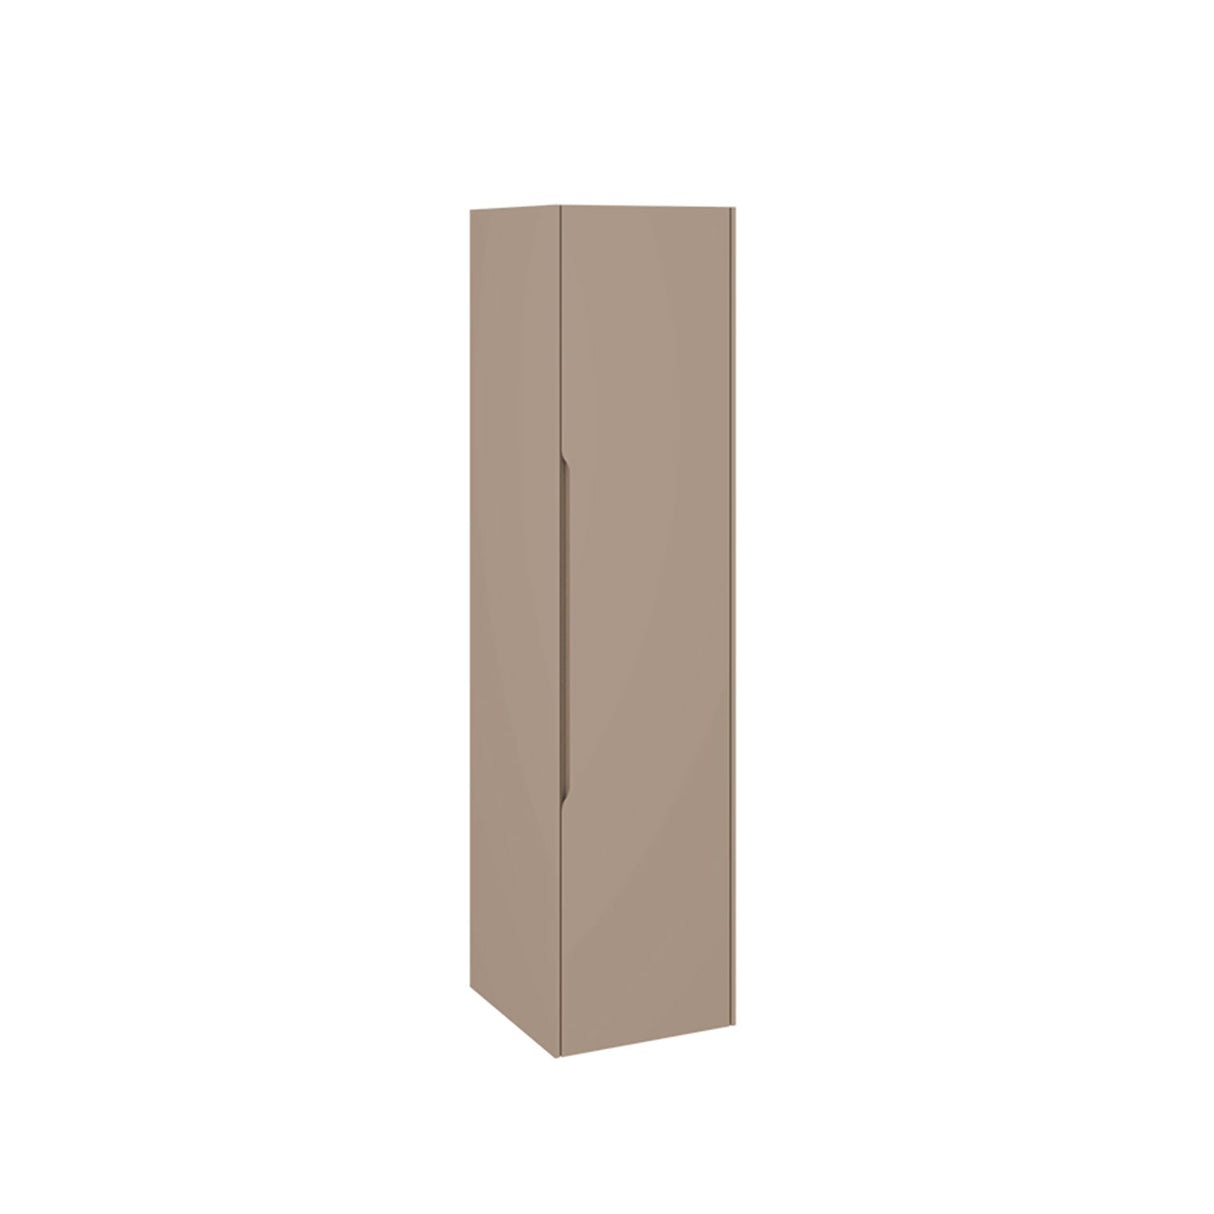 DAX Cenit Engineered Wood Side Cabinet, 55", Moka DAX-CEN055546